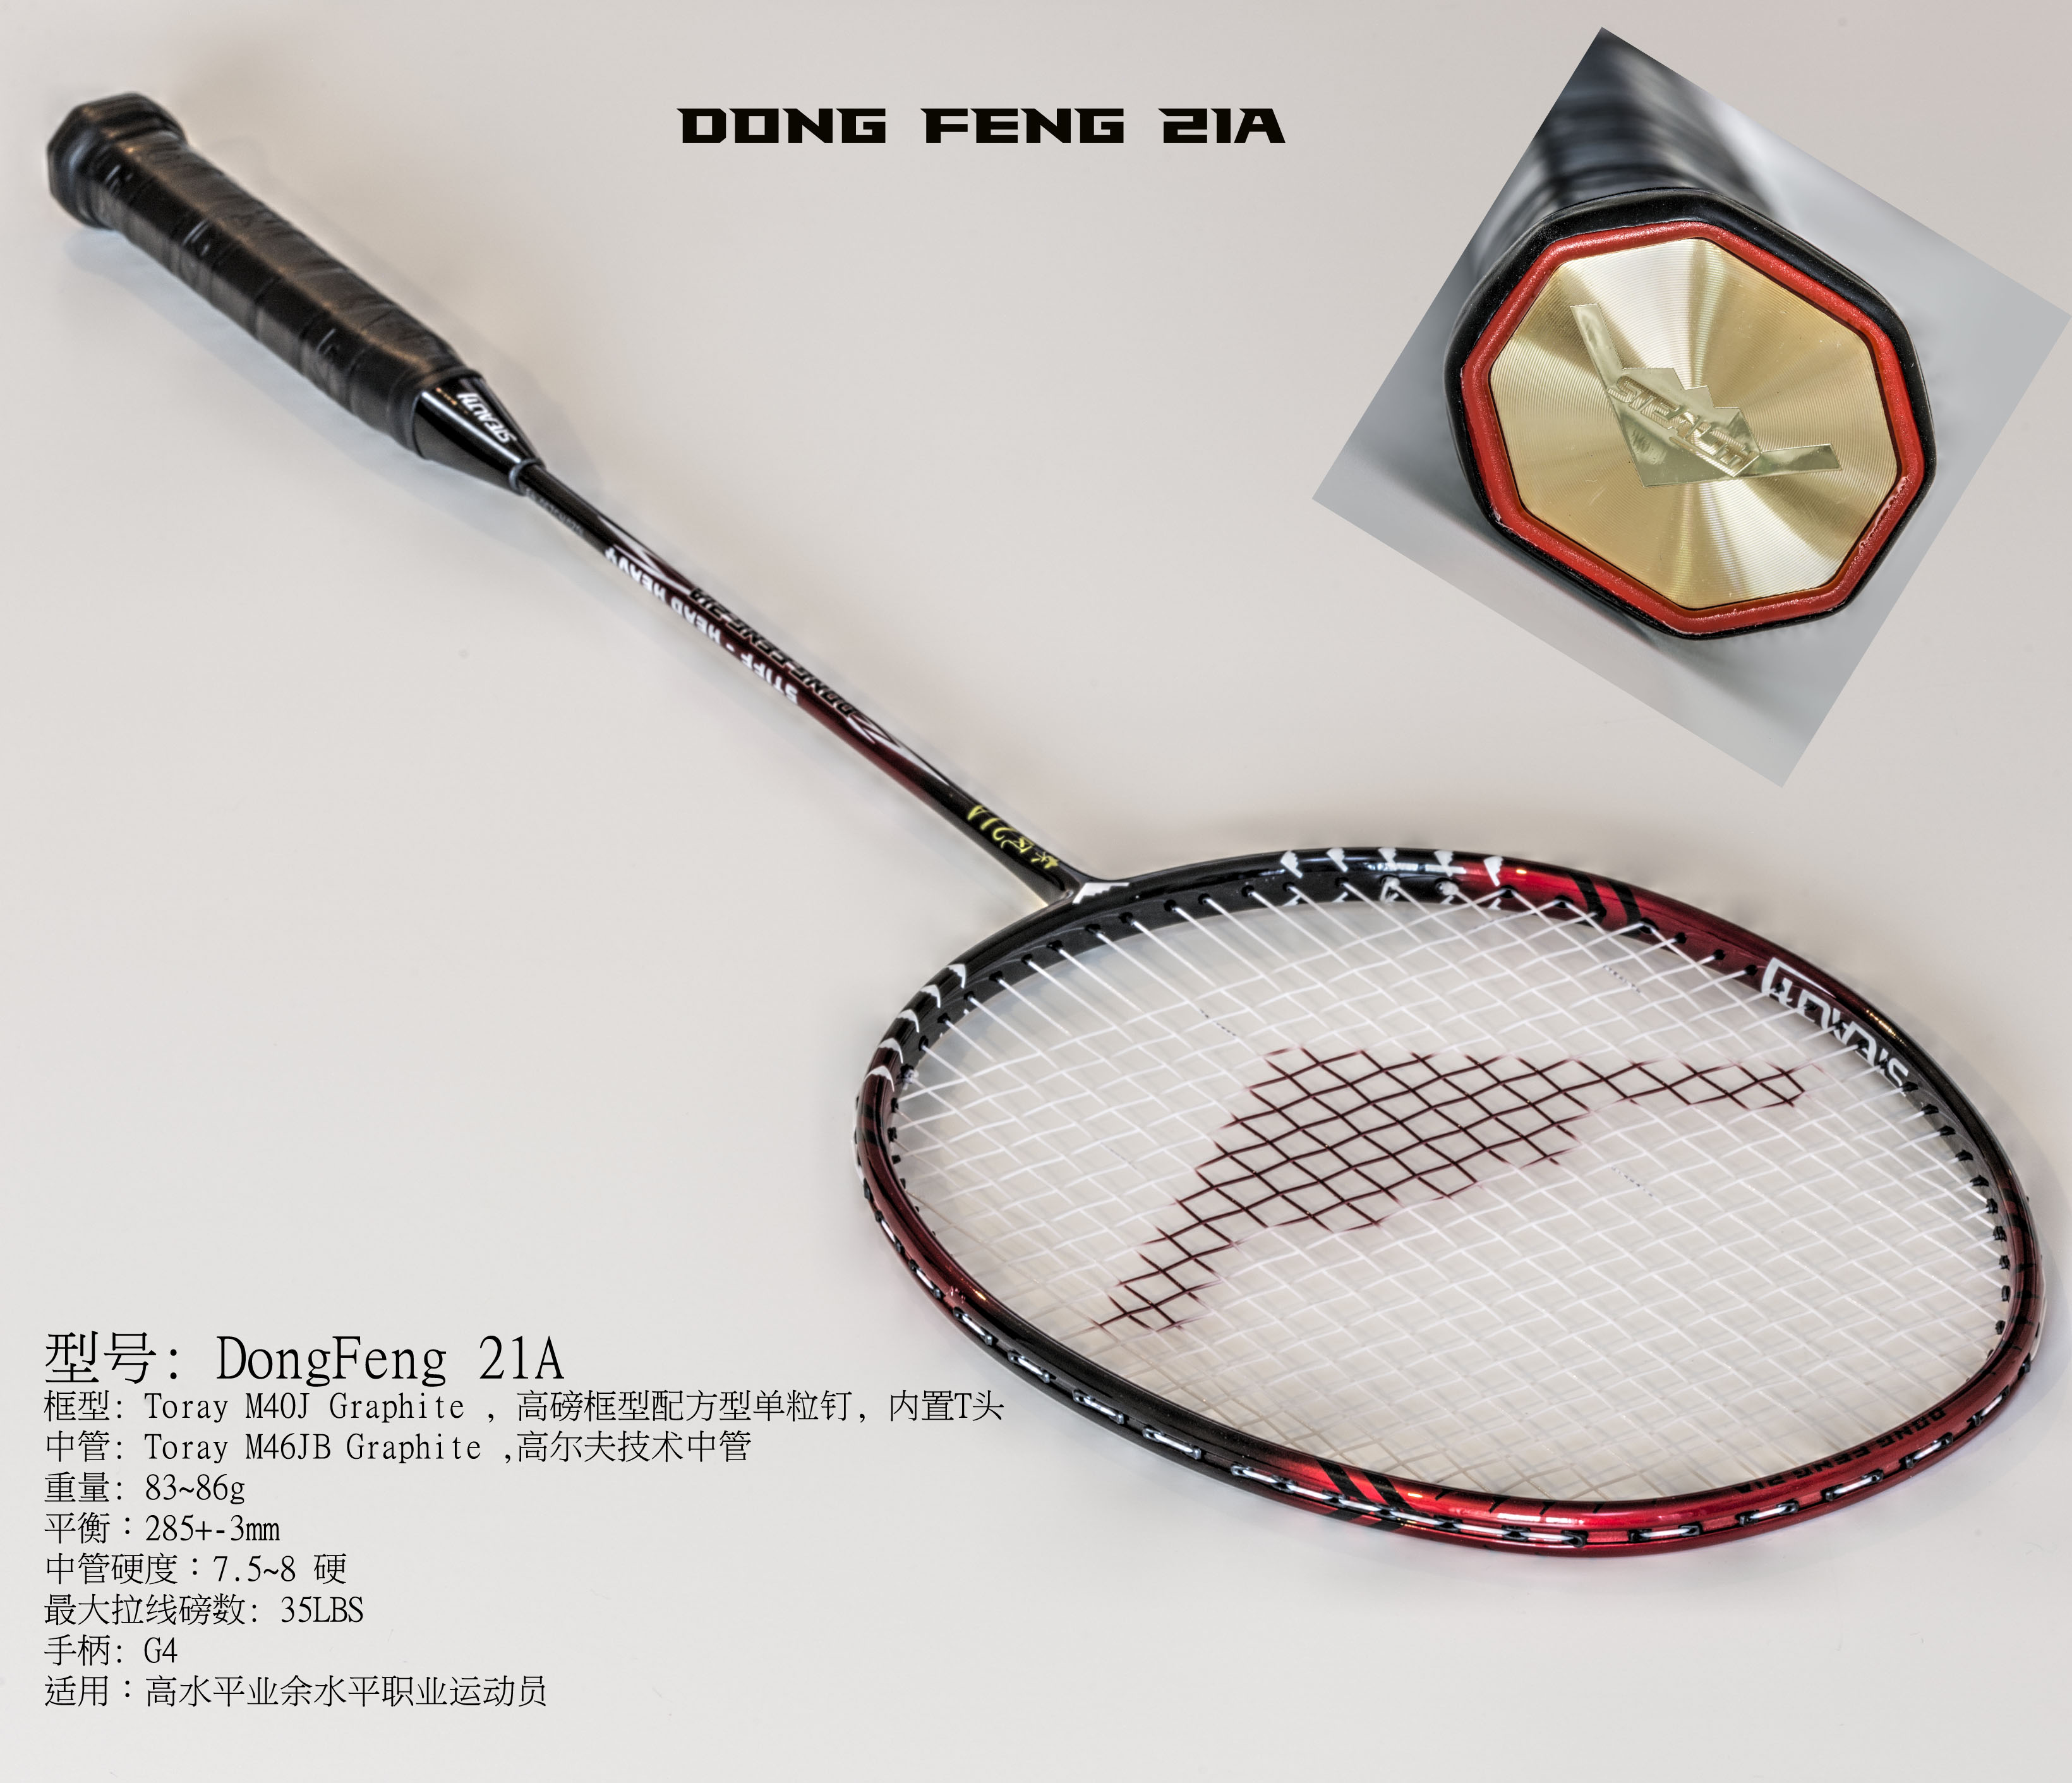 Stealth badminton racket